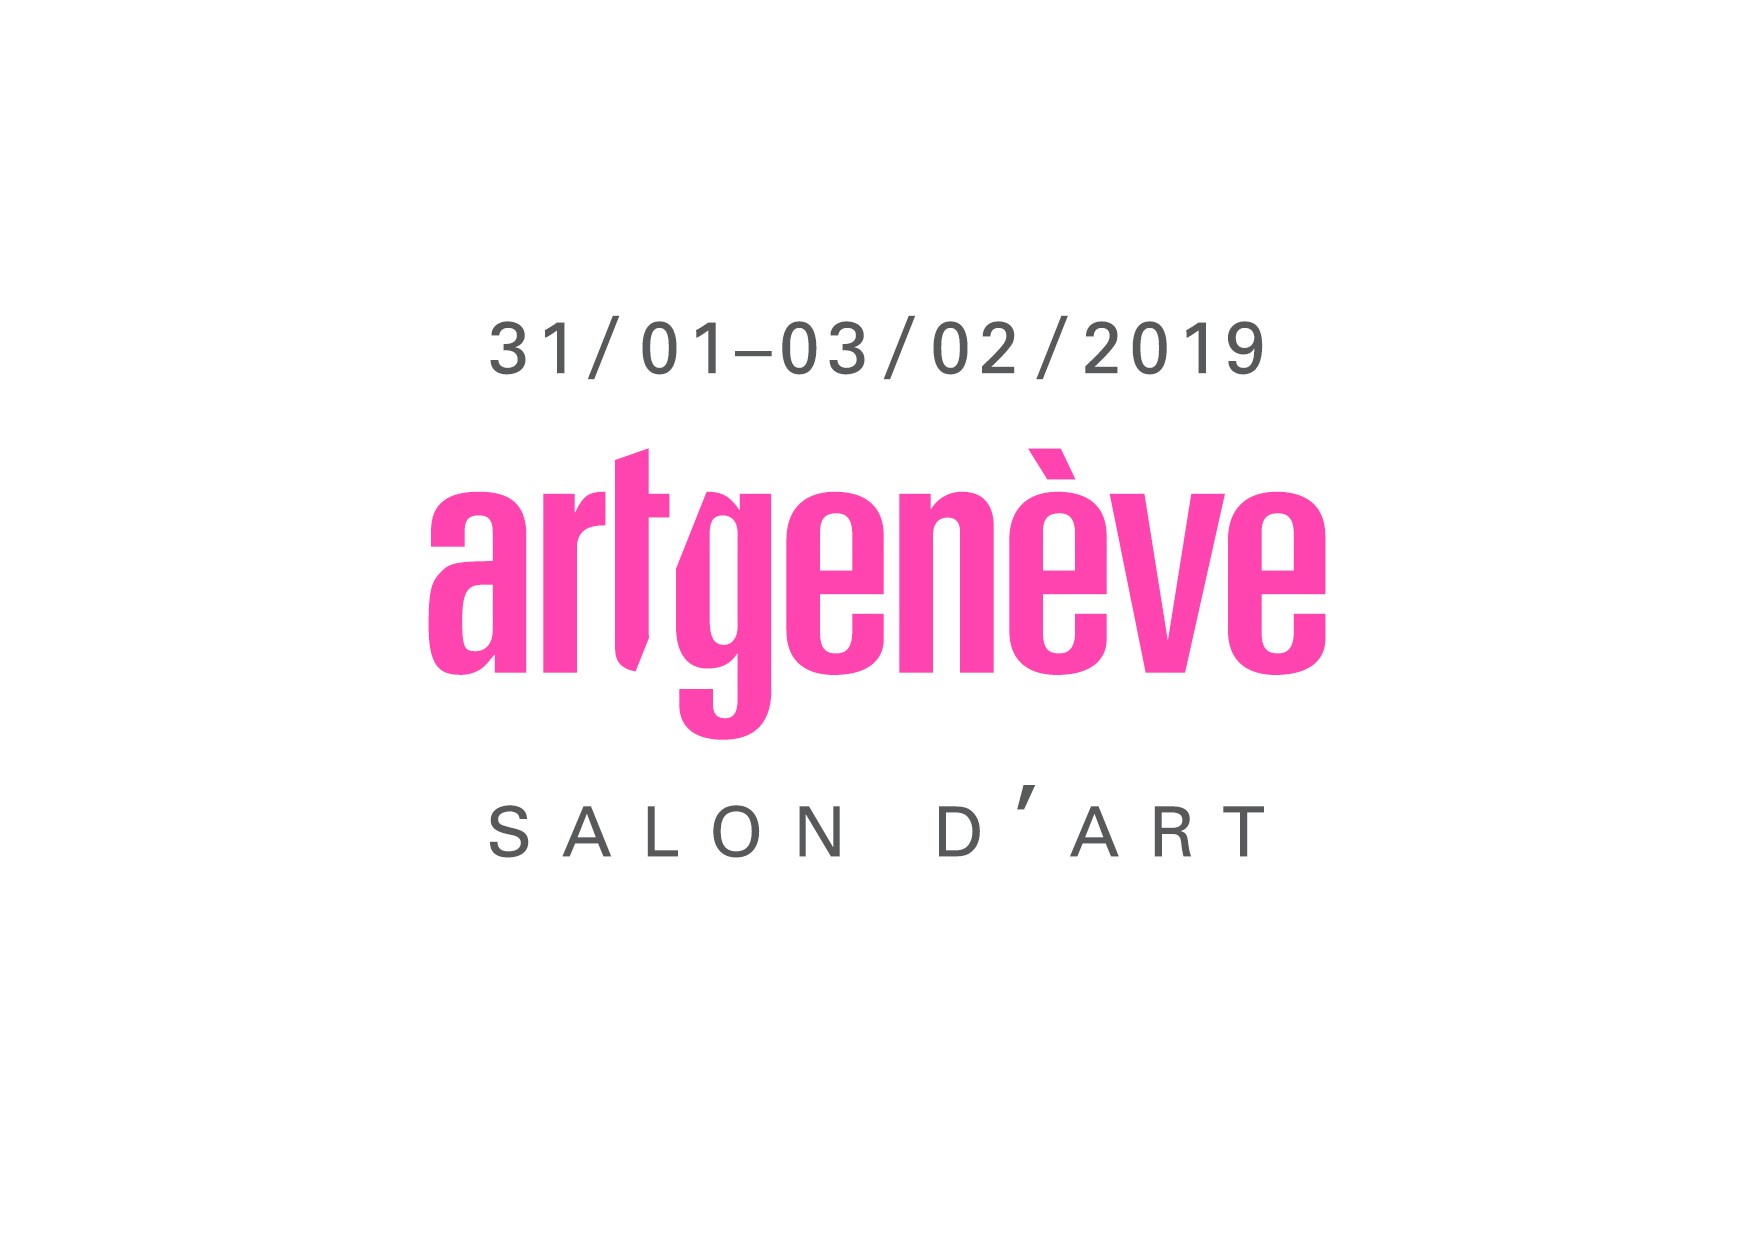 Artgenève: the International Fair of Arts